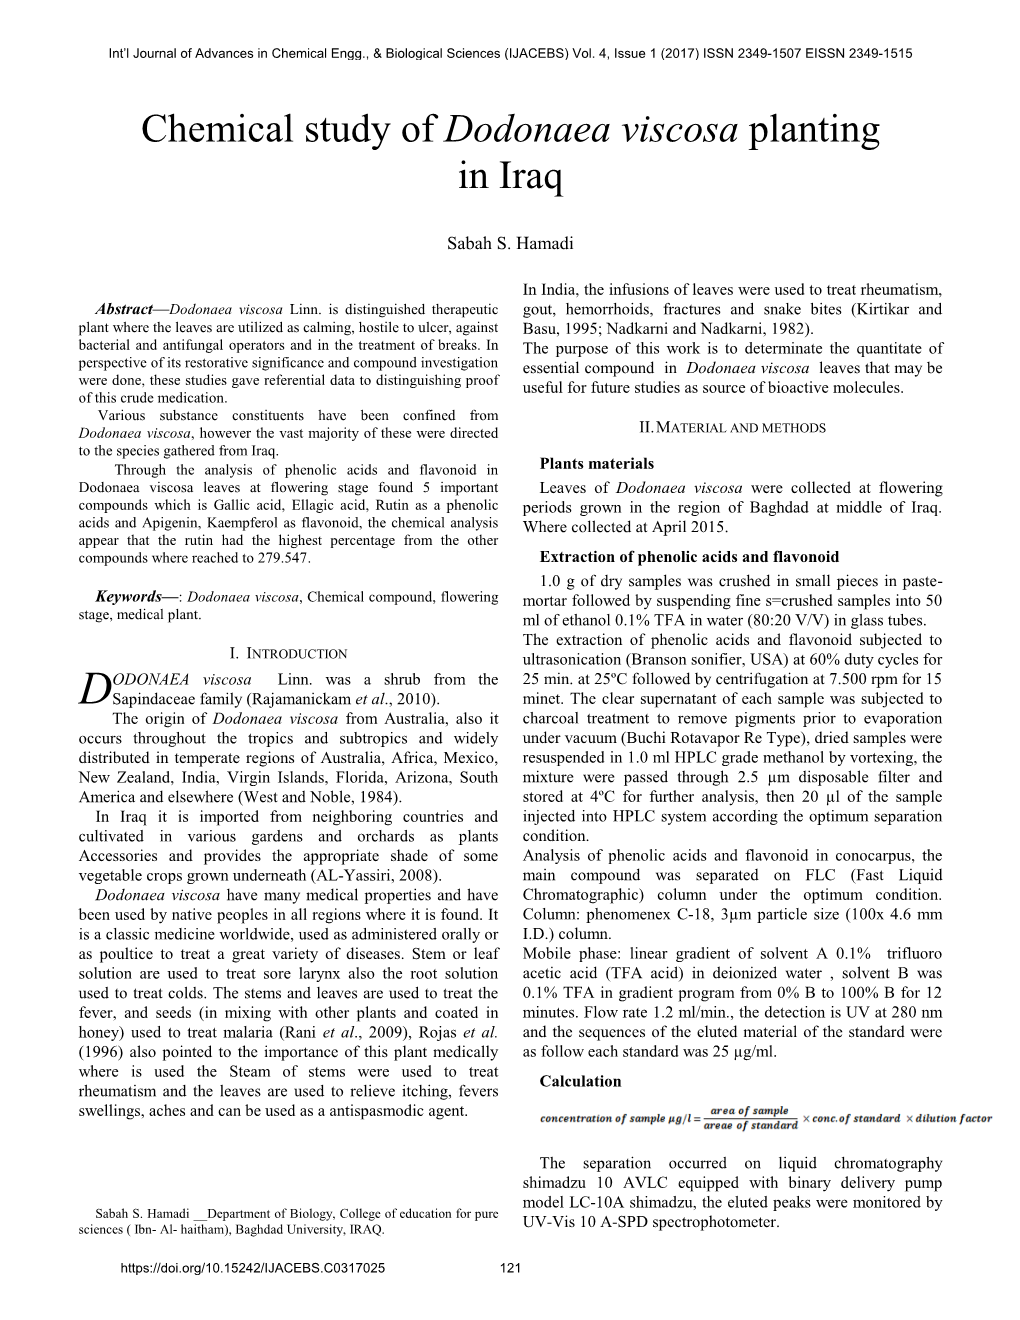 Chemical Study of Dodonaea Viscosa Planting in Iraq